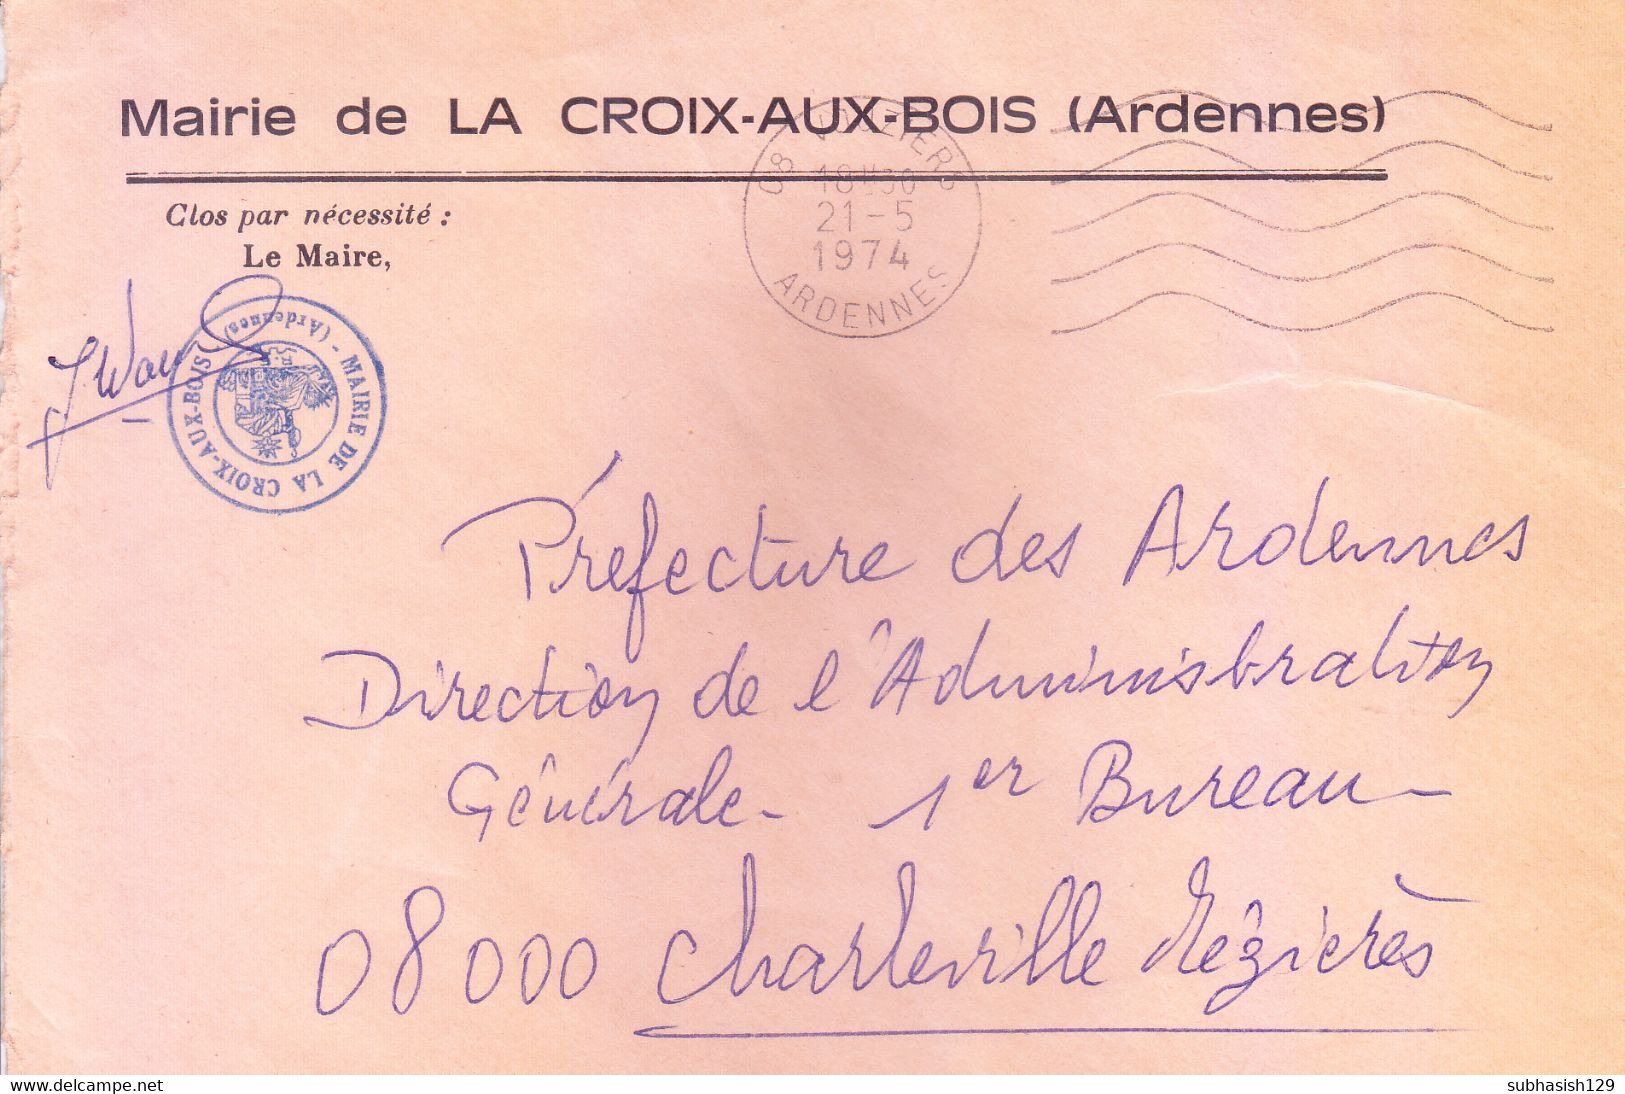 FRANCE : OFFICIAL ENVELOPE : MAYOR OFFICE OF LA CROIX AUX BOIS : USED IN 1974 WITH OFFICE SEAL : MAIRIE DE LA CROIX AUX - Lettres & Documents